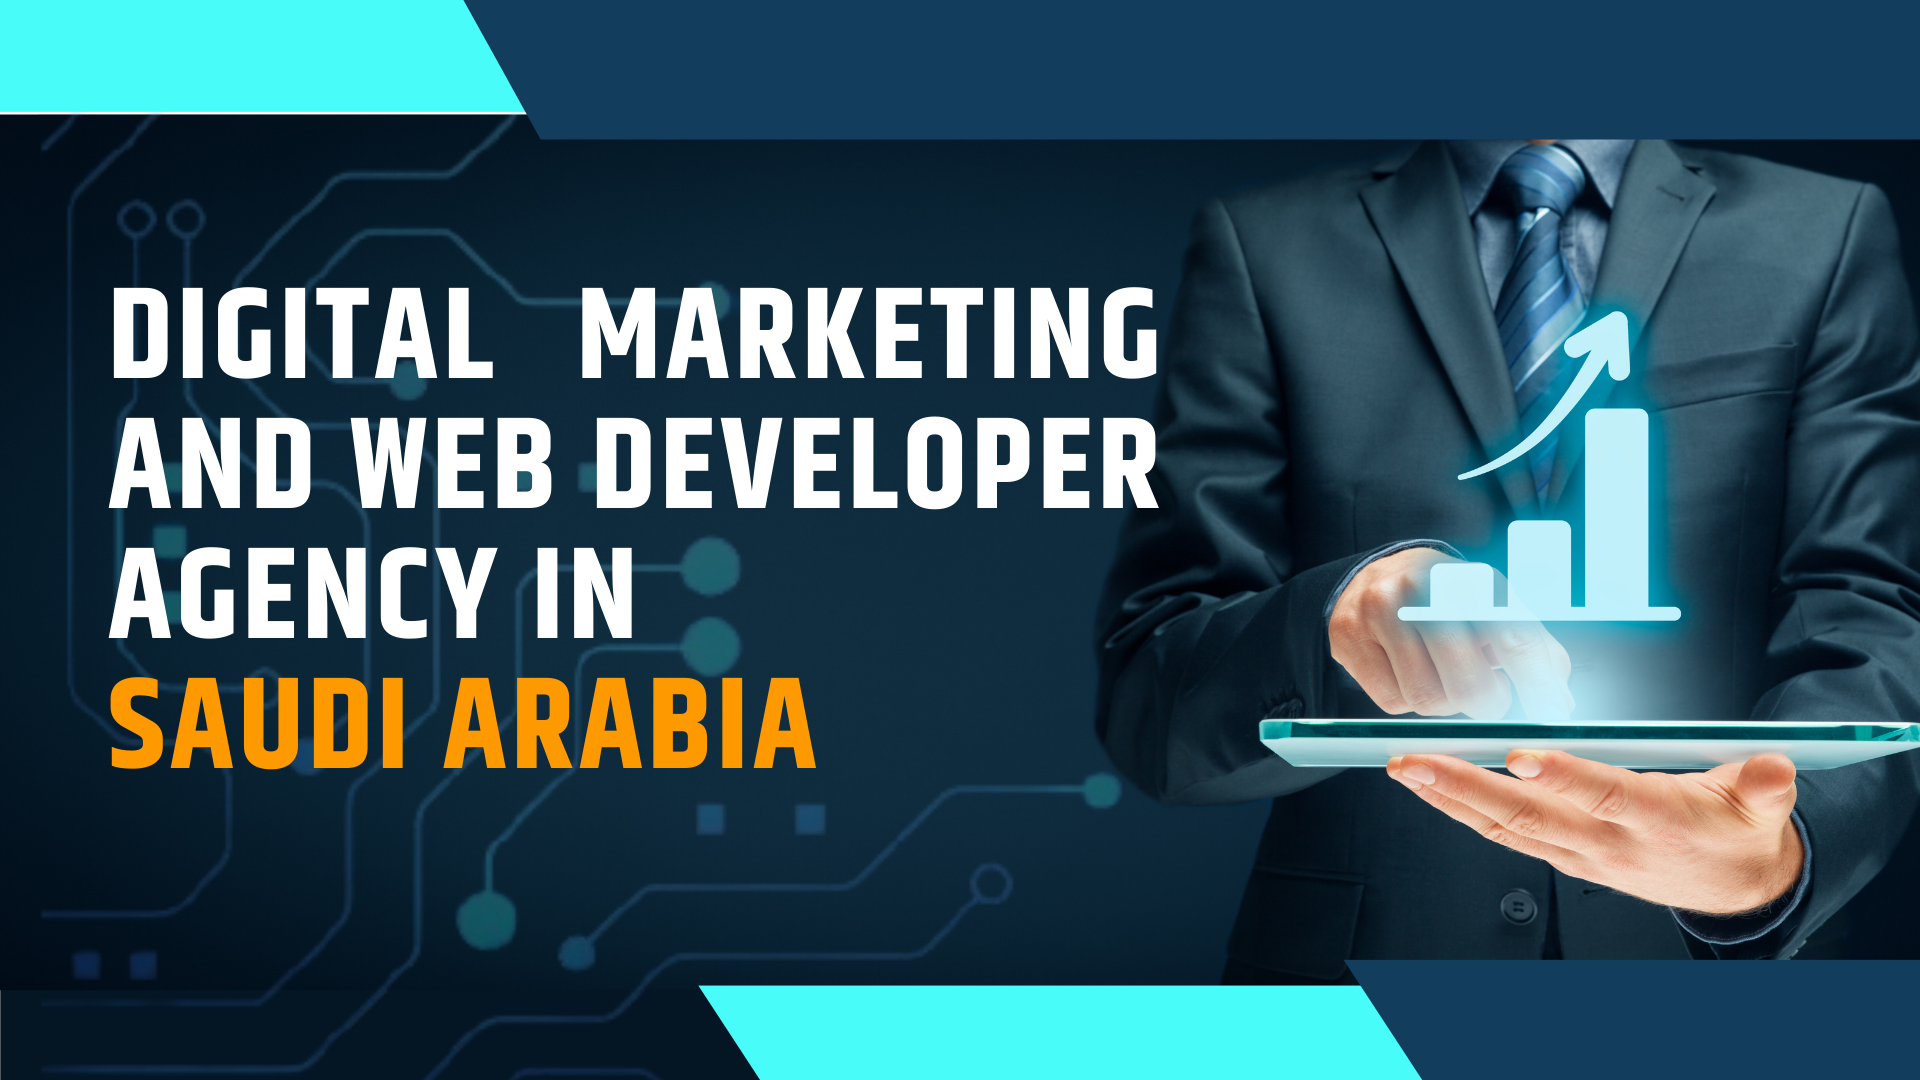 How To Choose A Digital Marketing and Web Developer Agency In Saudi Arabia